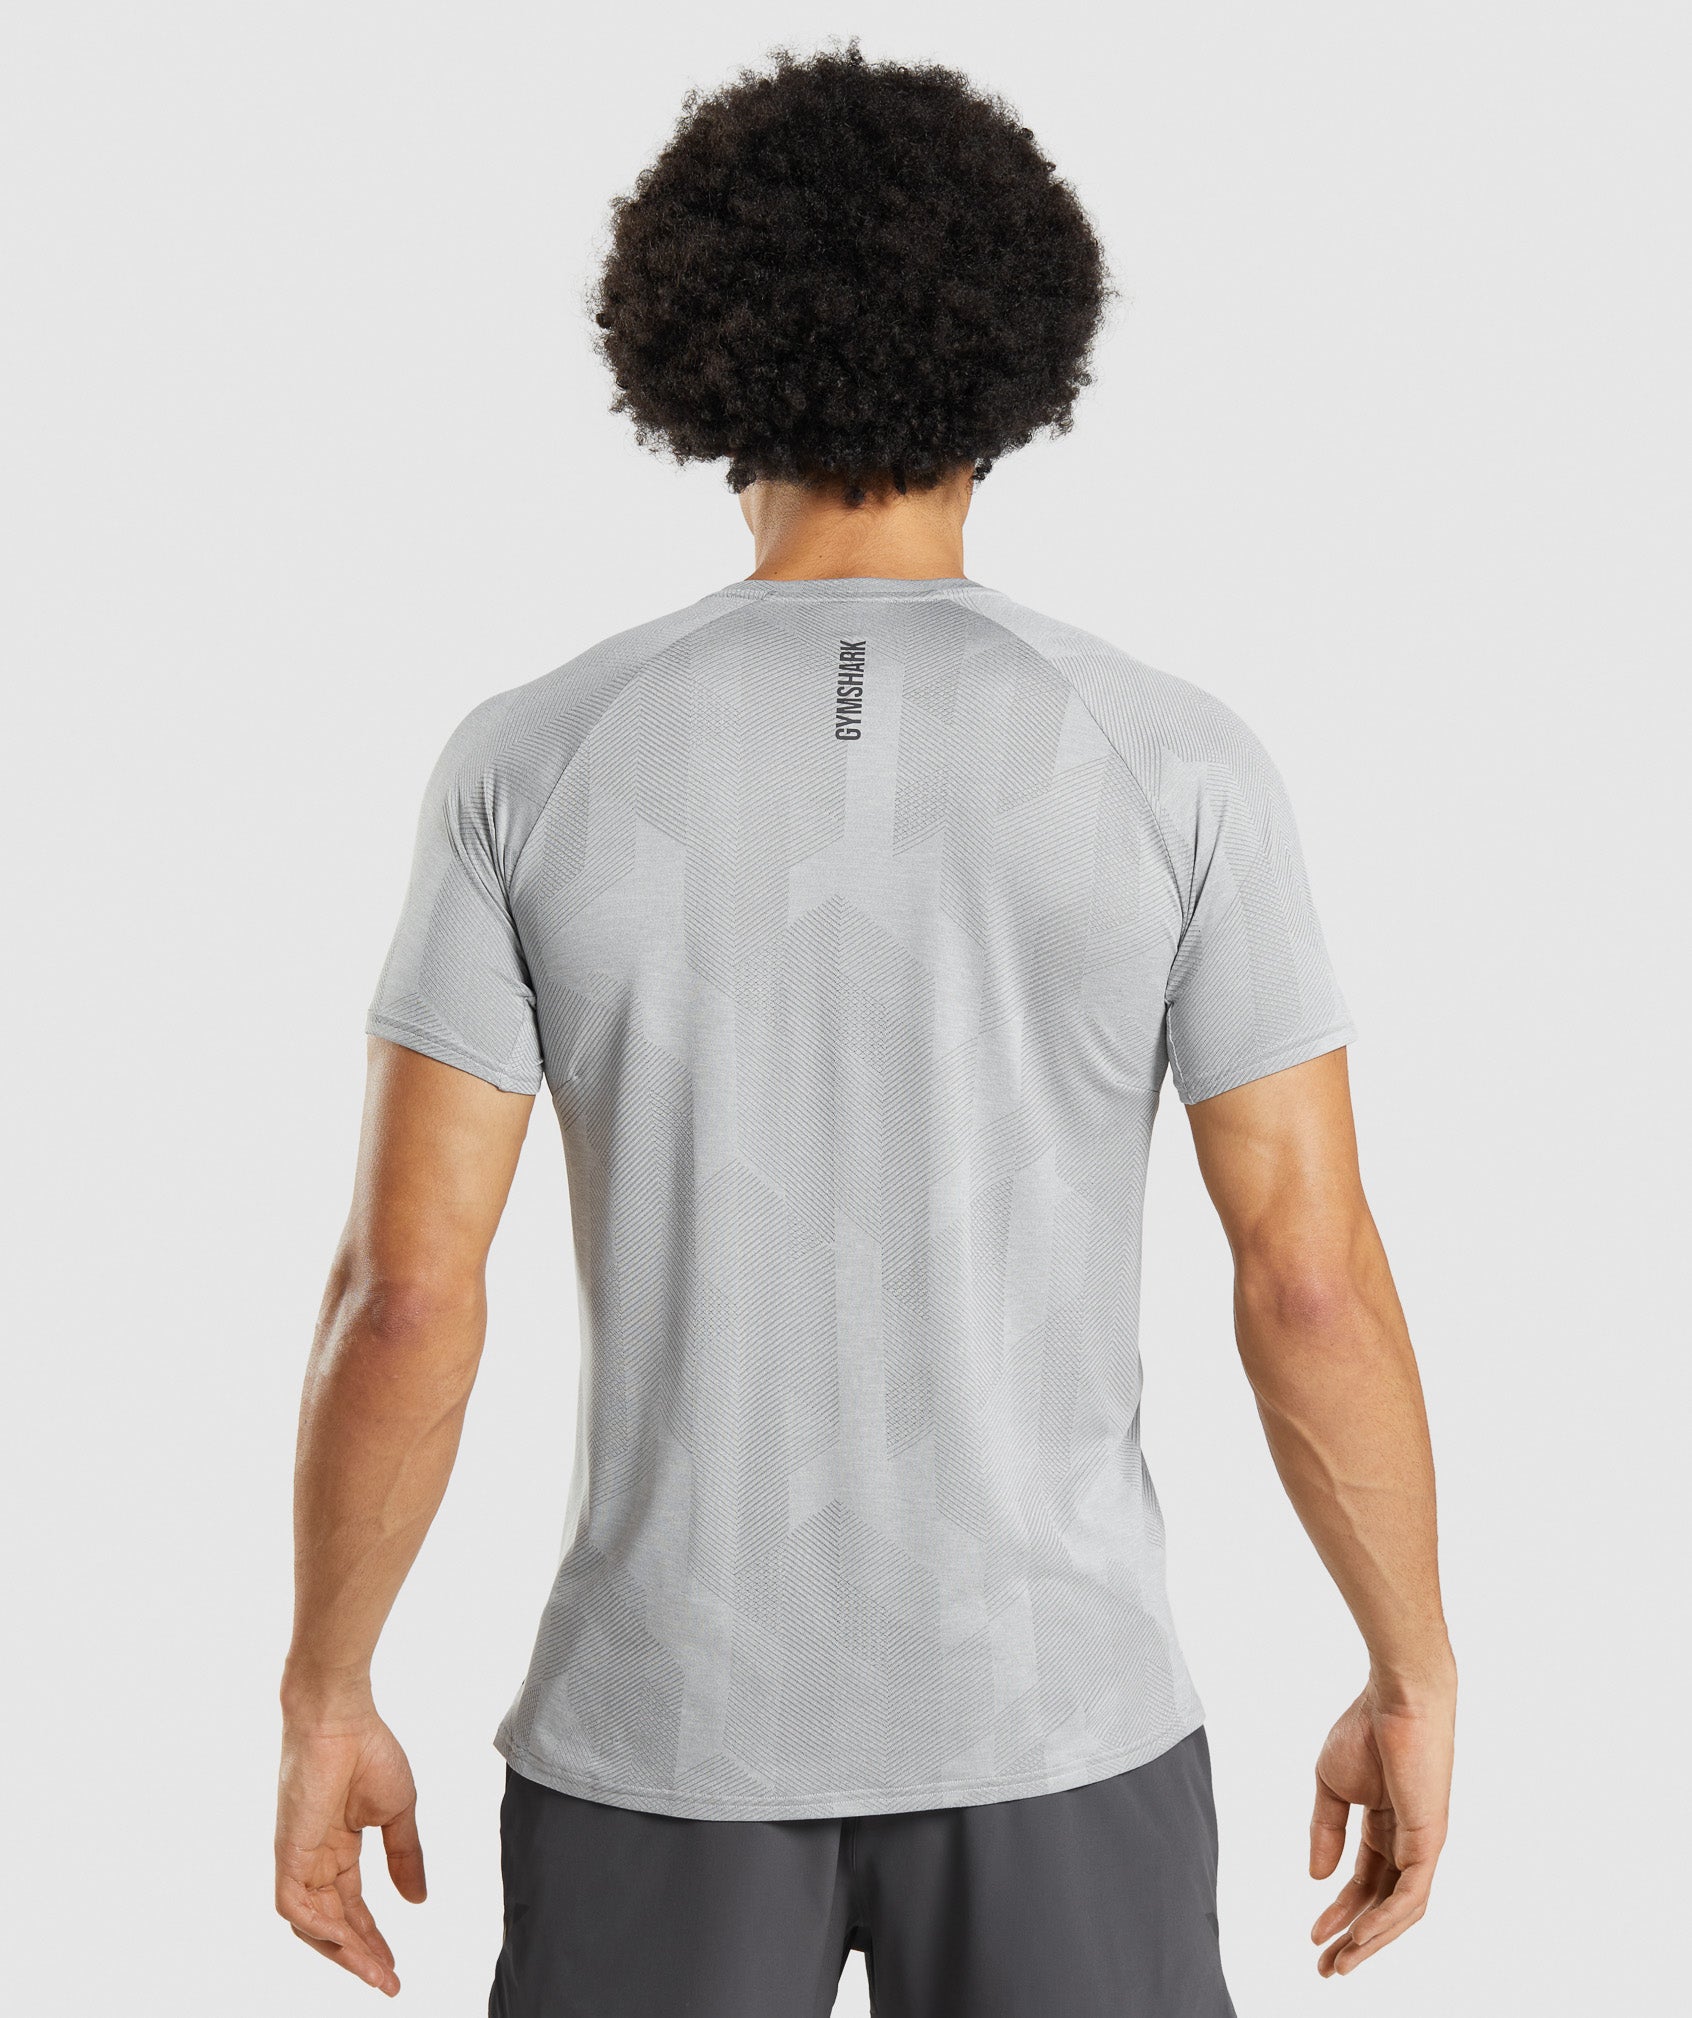 Apex T-Shirt in Smokey Grey/Light Grey - view 3